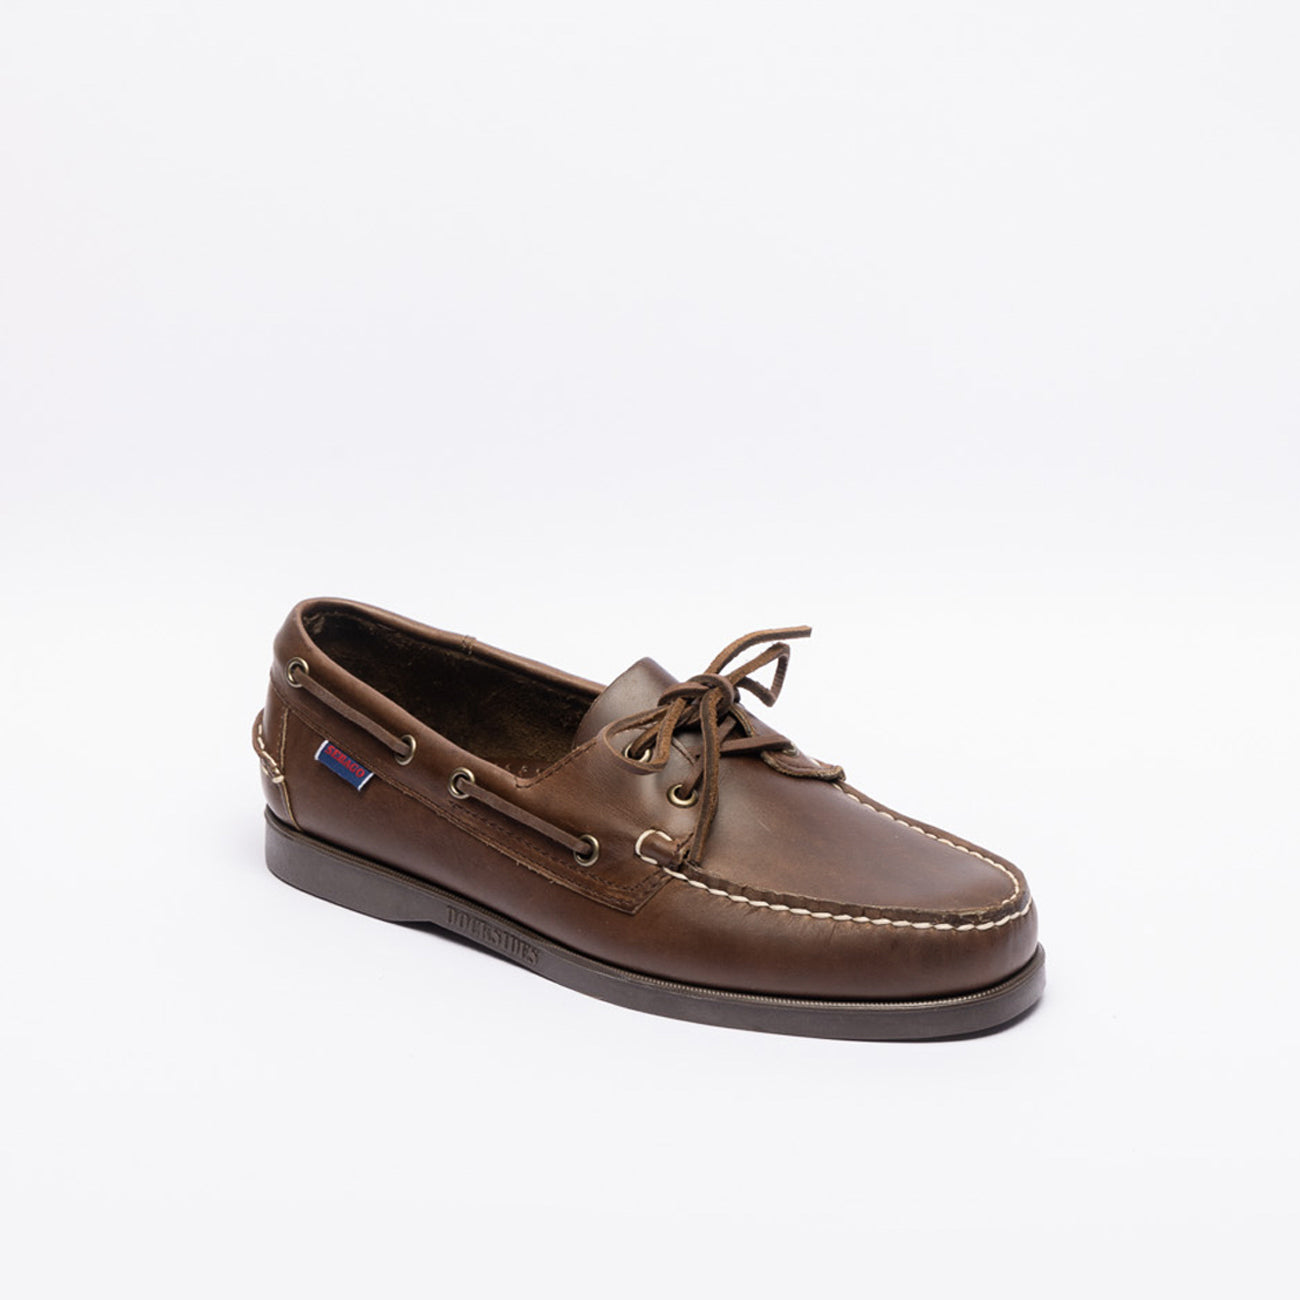 Sebago Docksides Portland boat shoes in brown leather (Dark Brown) dark sole